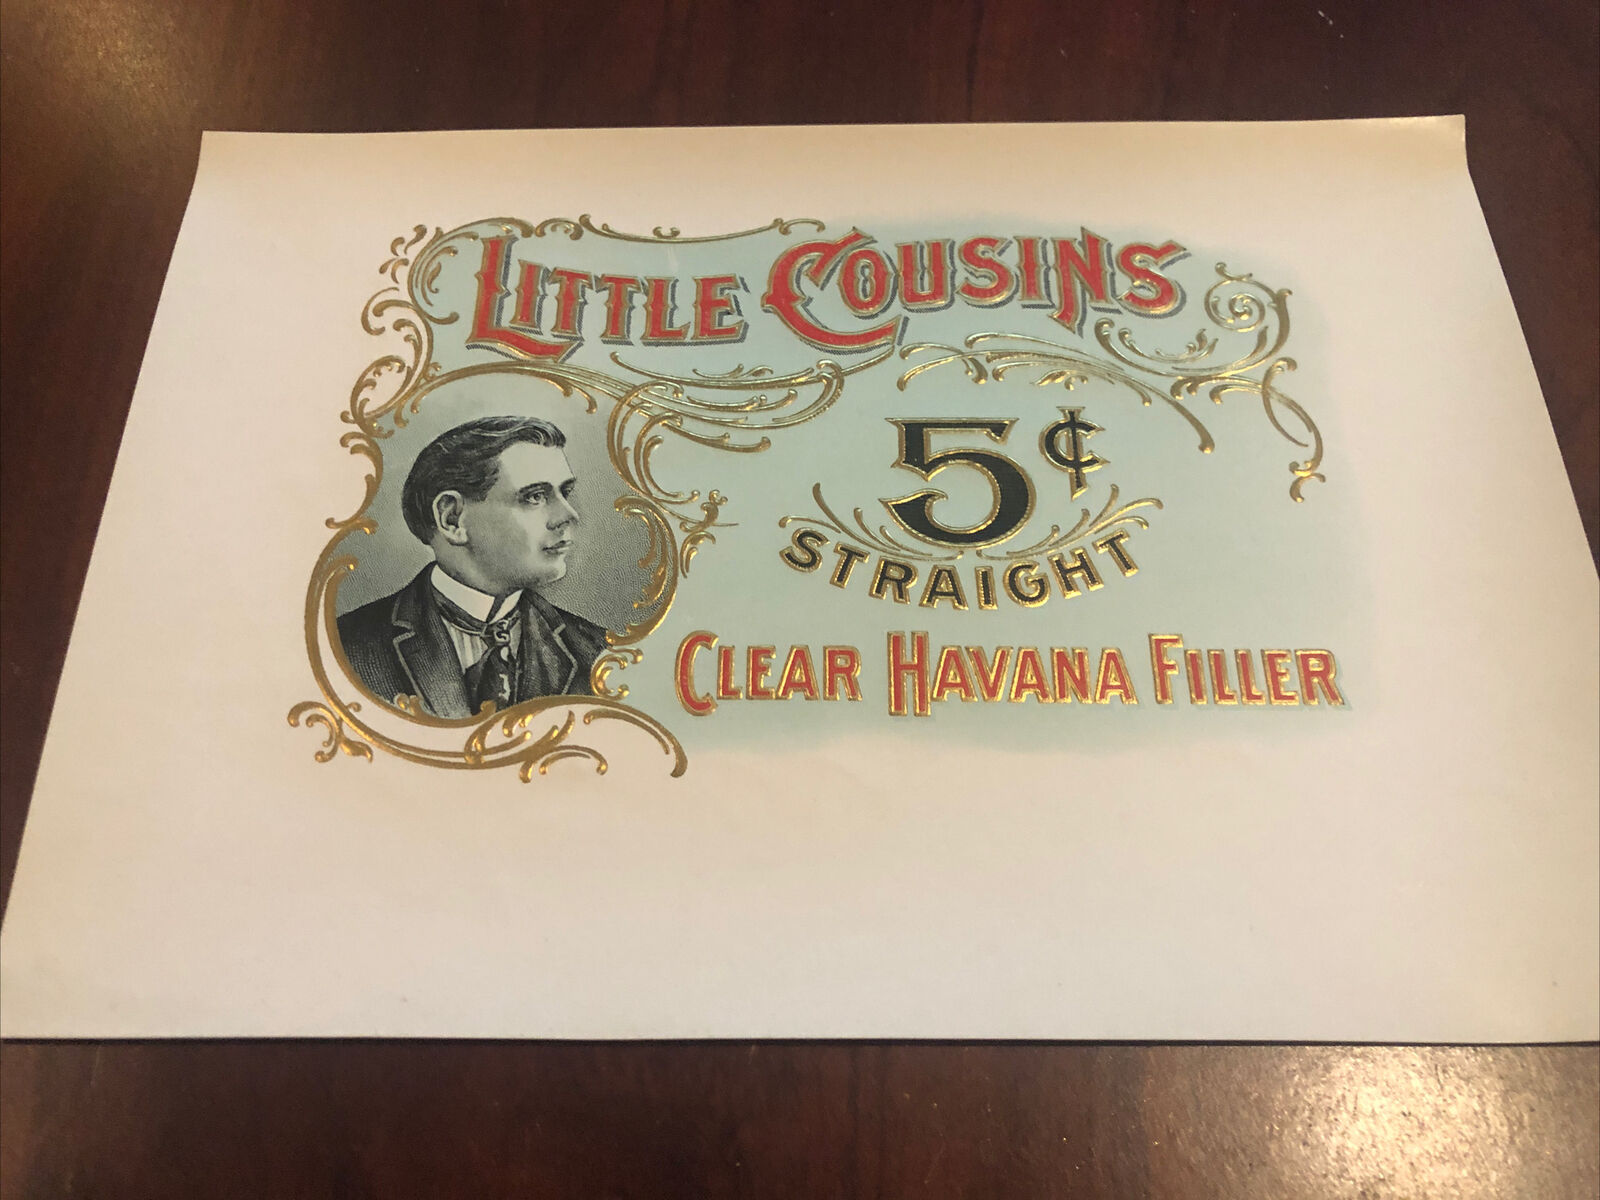 Little Cousins Cigar Label - Clear Havana Filler 5 cents straight